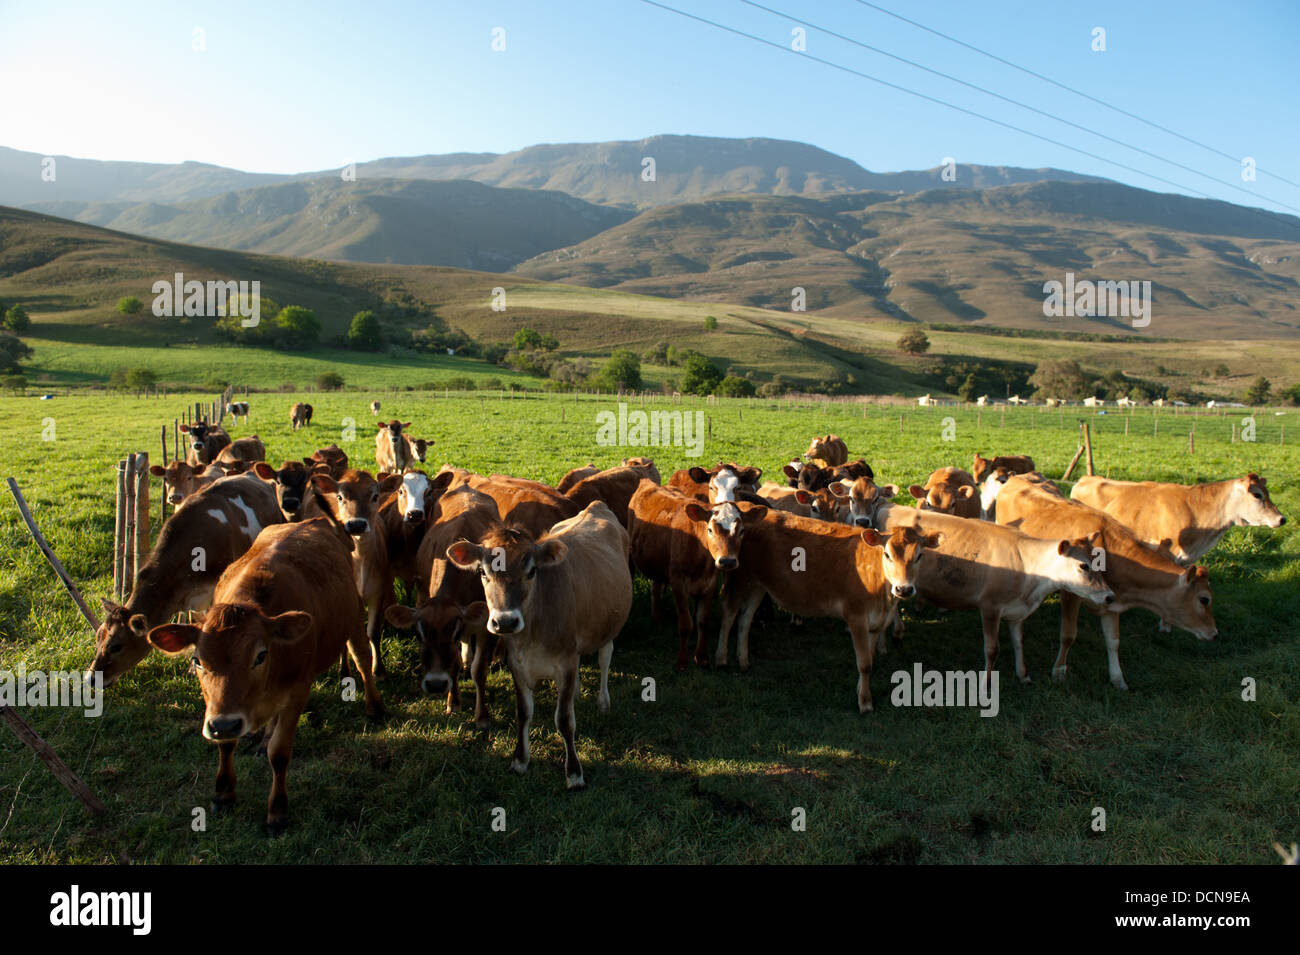 Cattle farm near Swellendam, Western Cape, South Africa Stock Photo